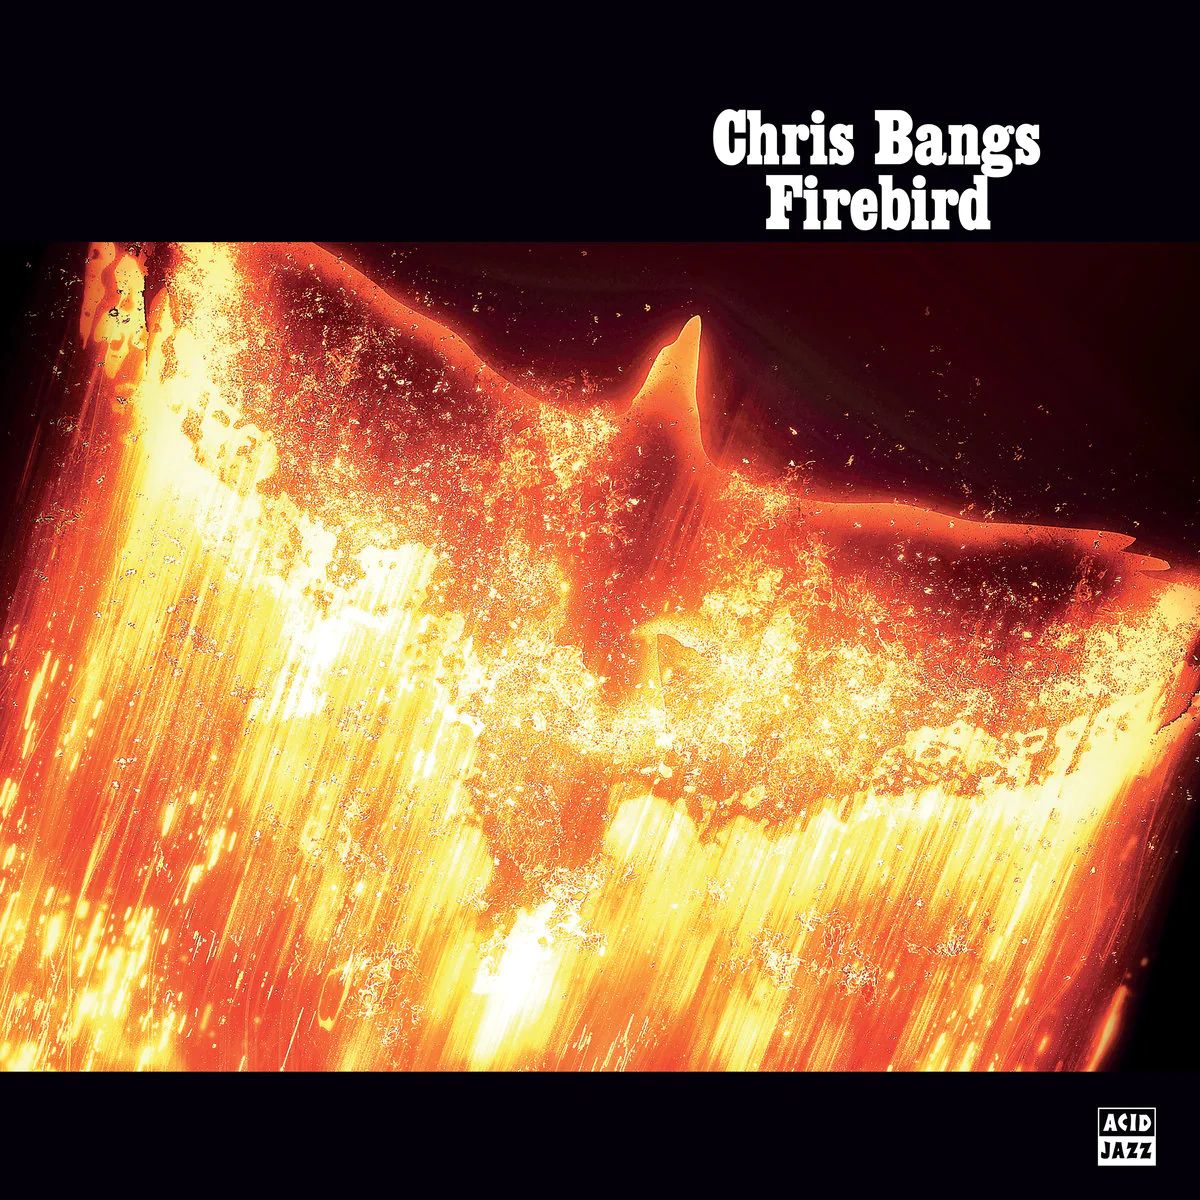 Виниловая пластинка Bangs, Chris, Firebird (0676499066157) виниловая пластинка botti chris chris botti 0602455165879